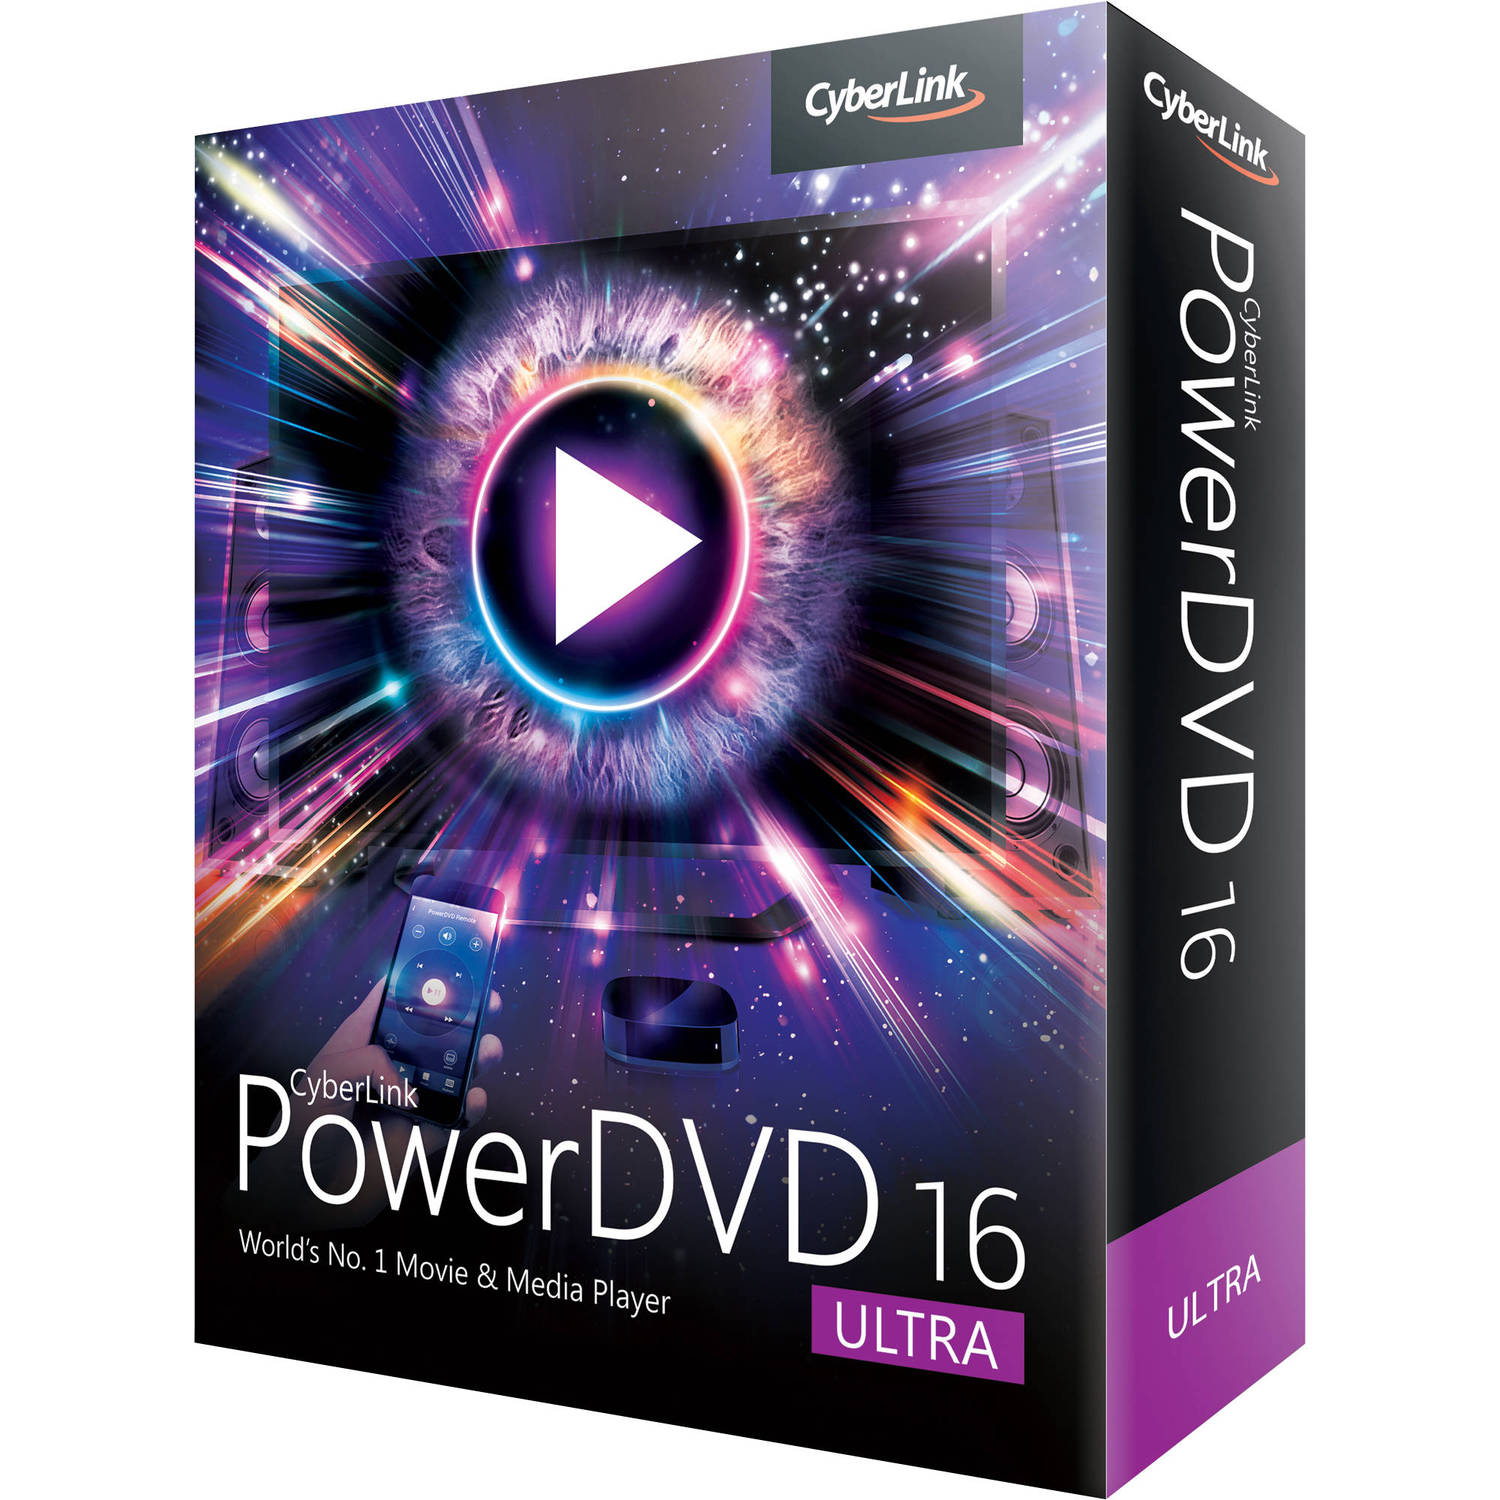 Cyberlink Powerdvd 16 Ultra Edition Boxed Dvd Eg00 Rpu0 00 B H